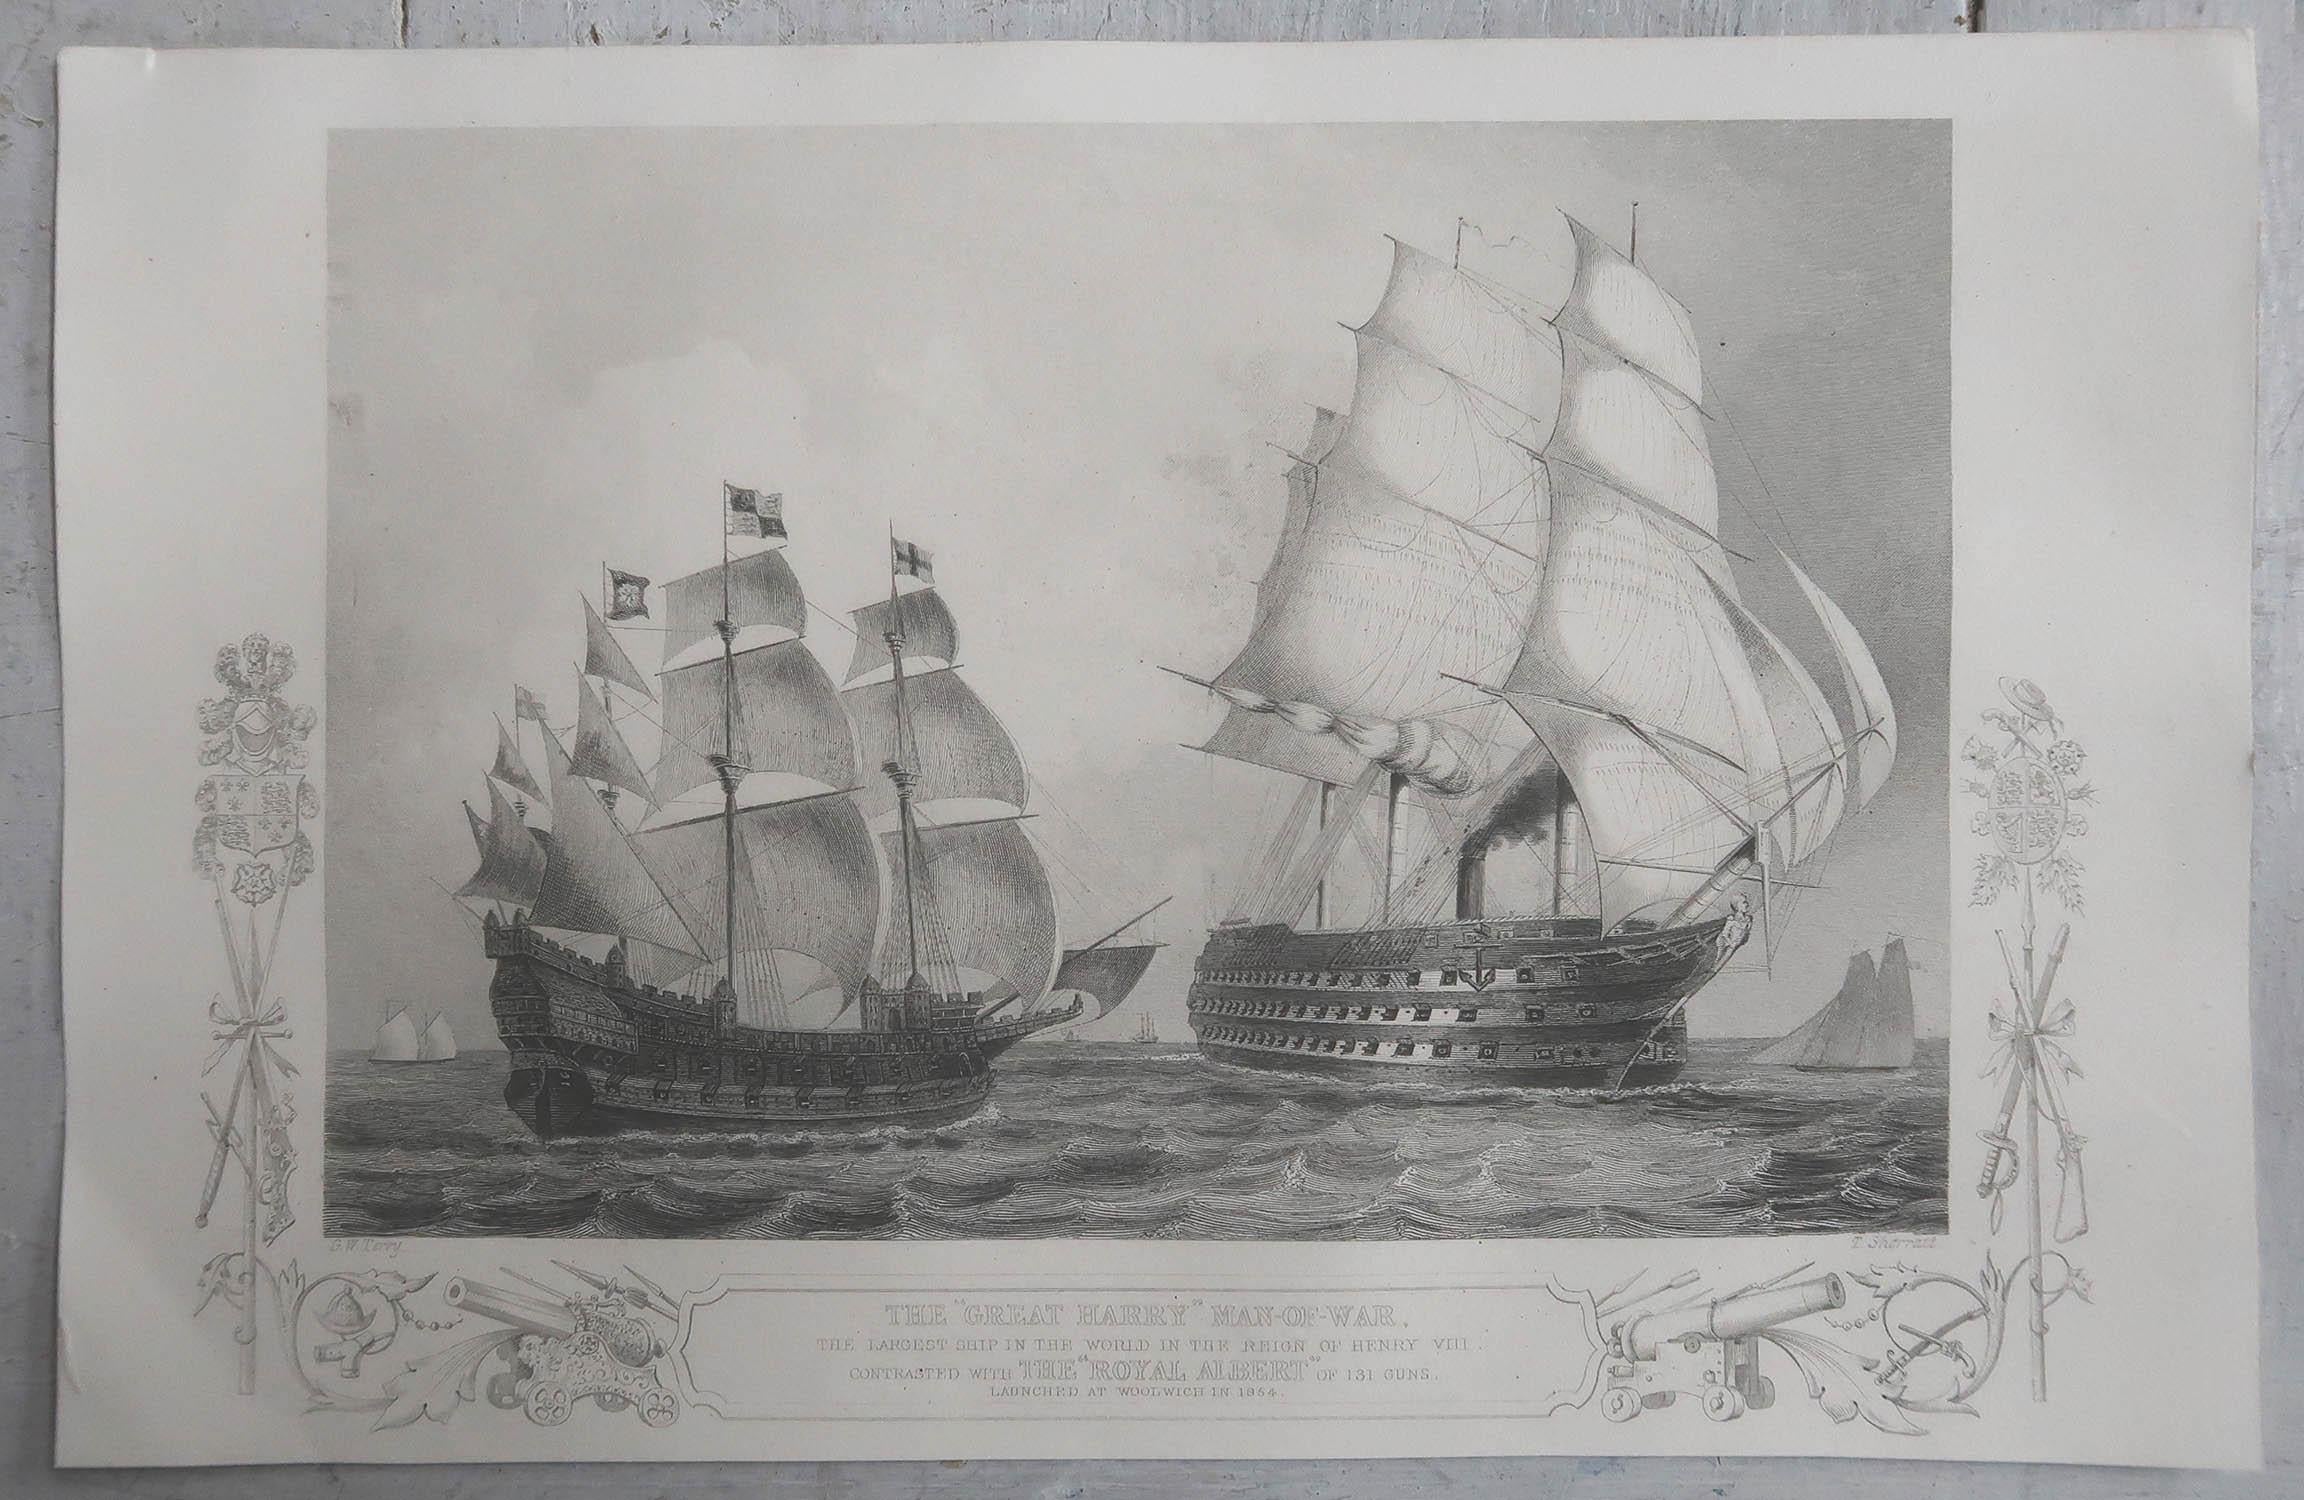 Other Original Antique Marine Print. The 